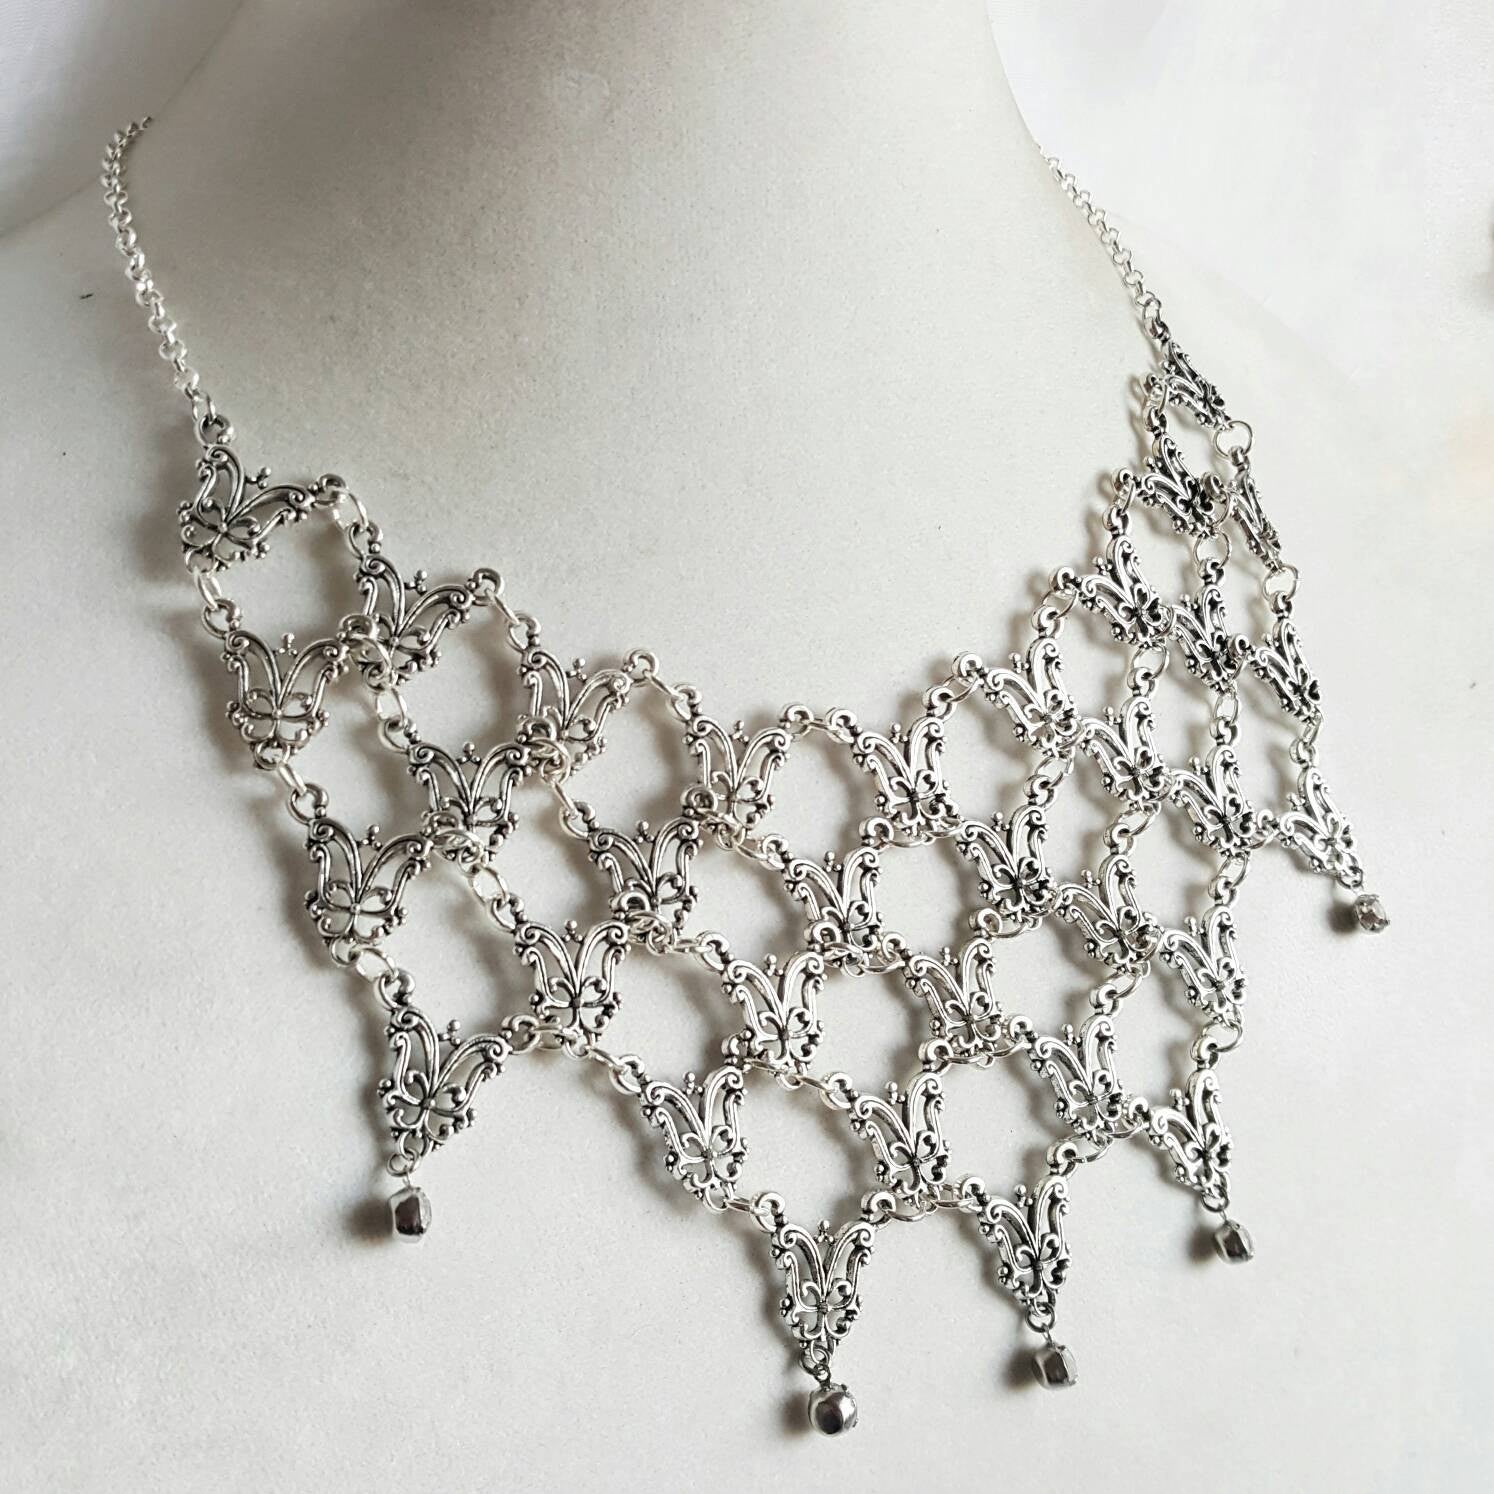 Silver Victorian Necklace - Bridal Jewelry - Ren Faire Costume - Victorian Jewelry - Fantasy Jewelry - Prom Jewelry - Handmade Gift Idea - DRAVYNMOOR